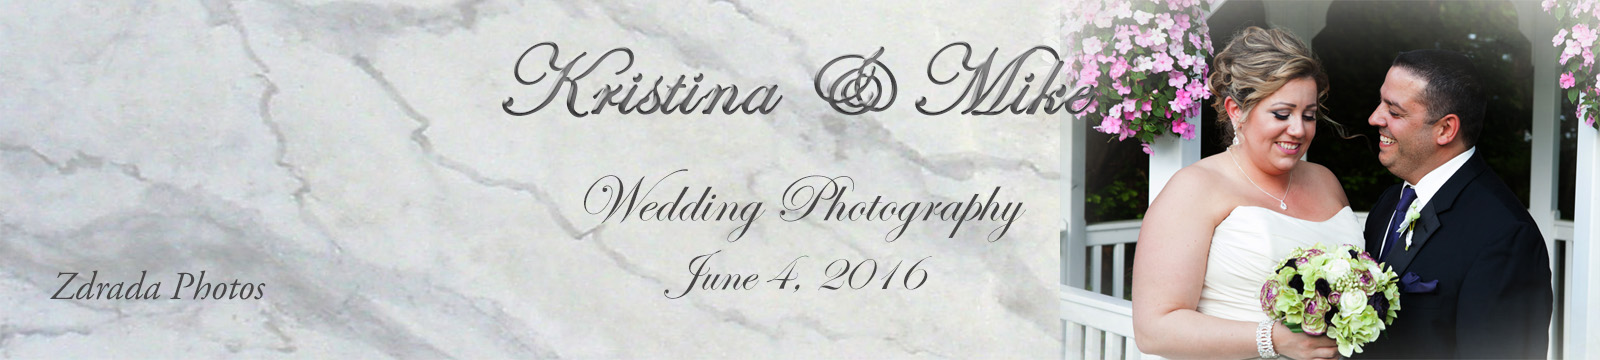 Wedding photography at DiBurro's Haverhill Ma. WEDDING Photos